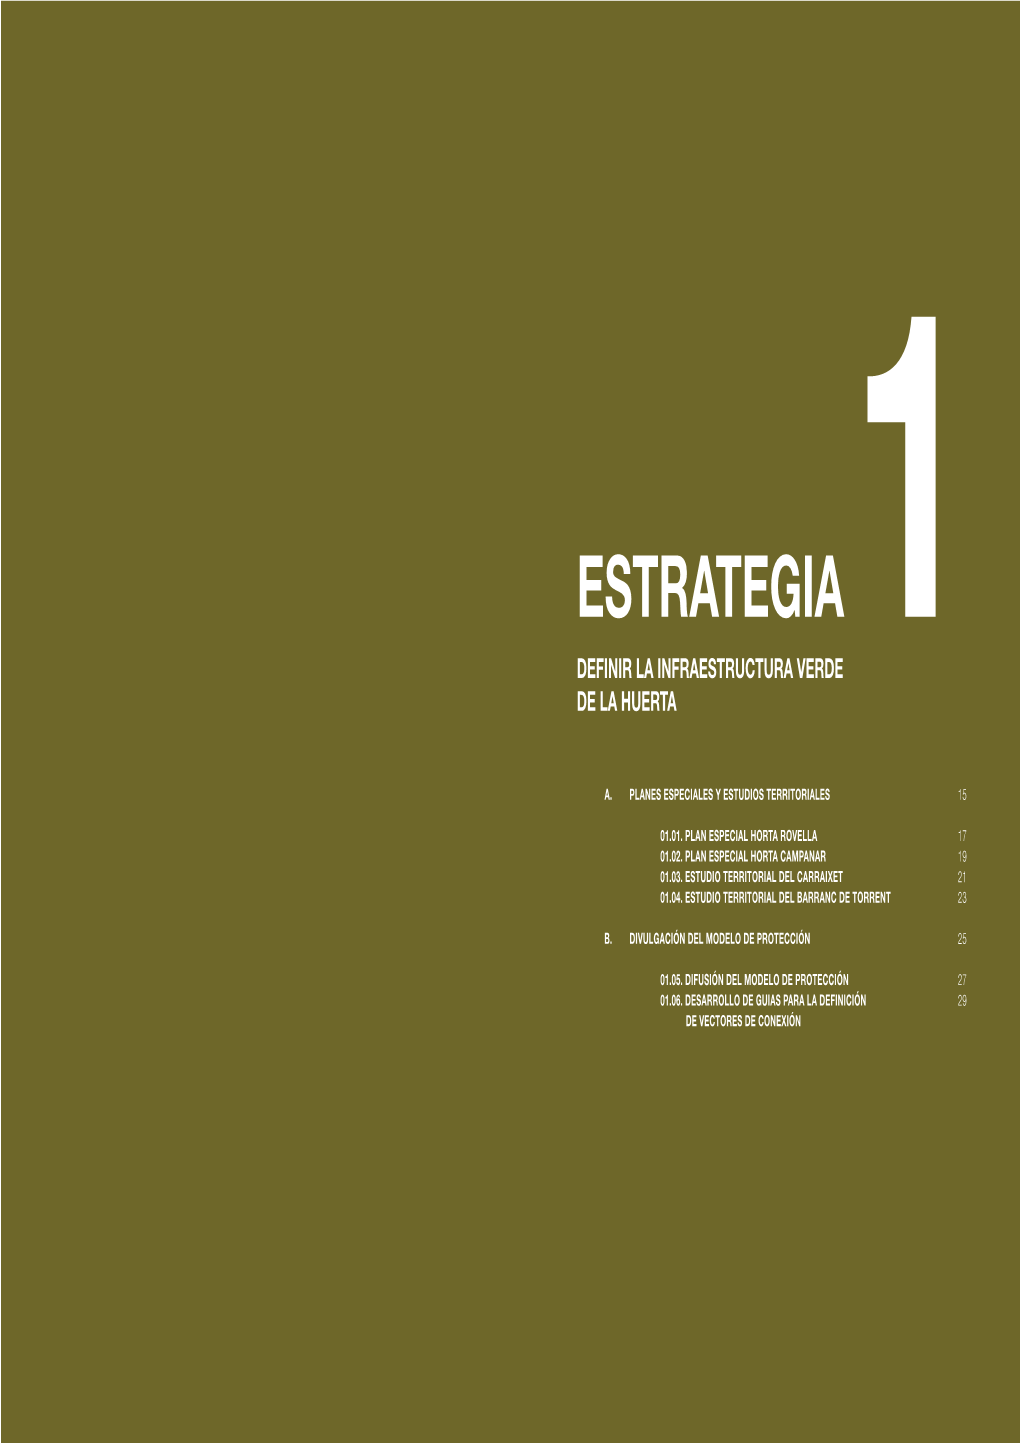 Estrategia 1: Definir La Infraestructura Verde De La Huerta